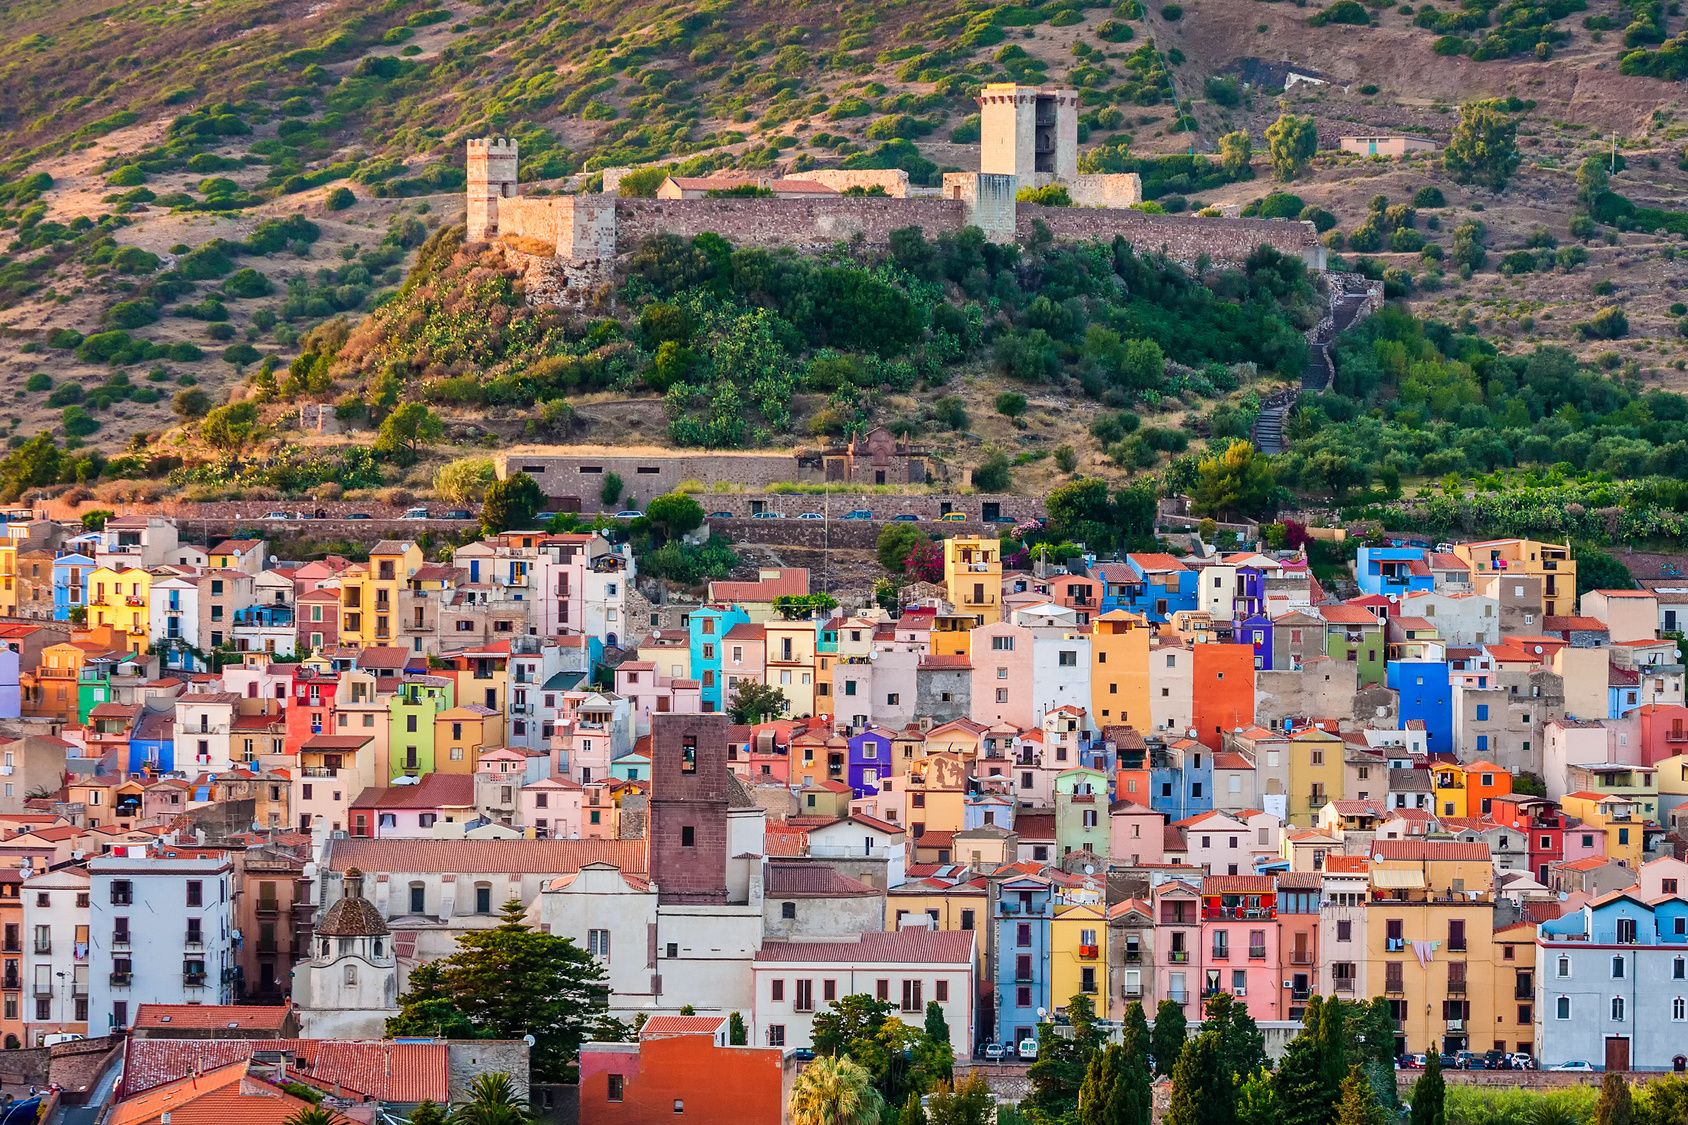 Colourful houses, Bosa, Sardinia, Italy, Europe